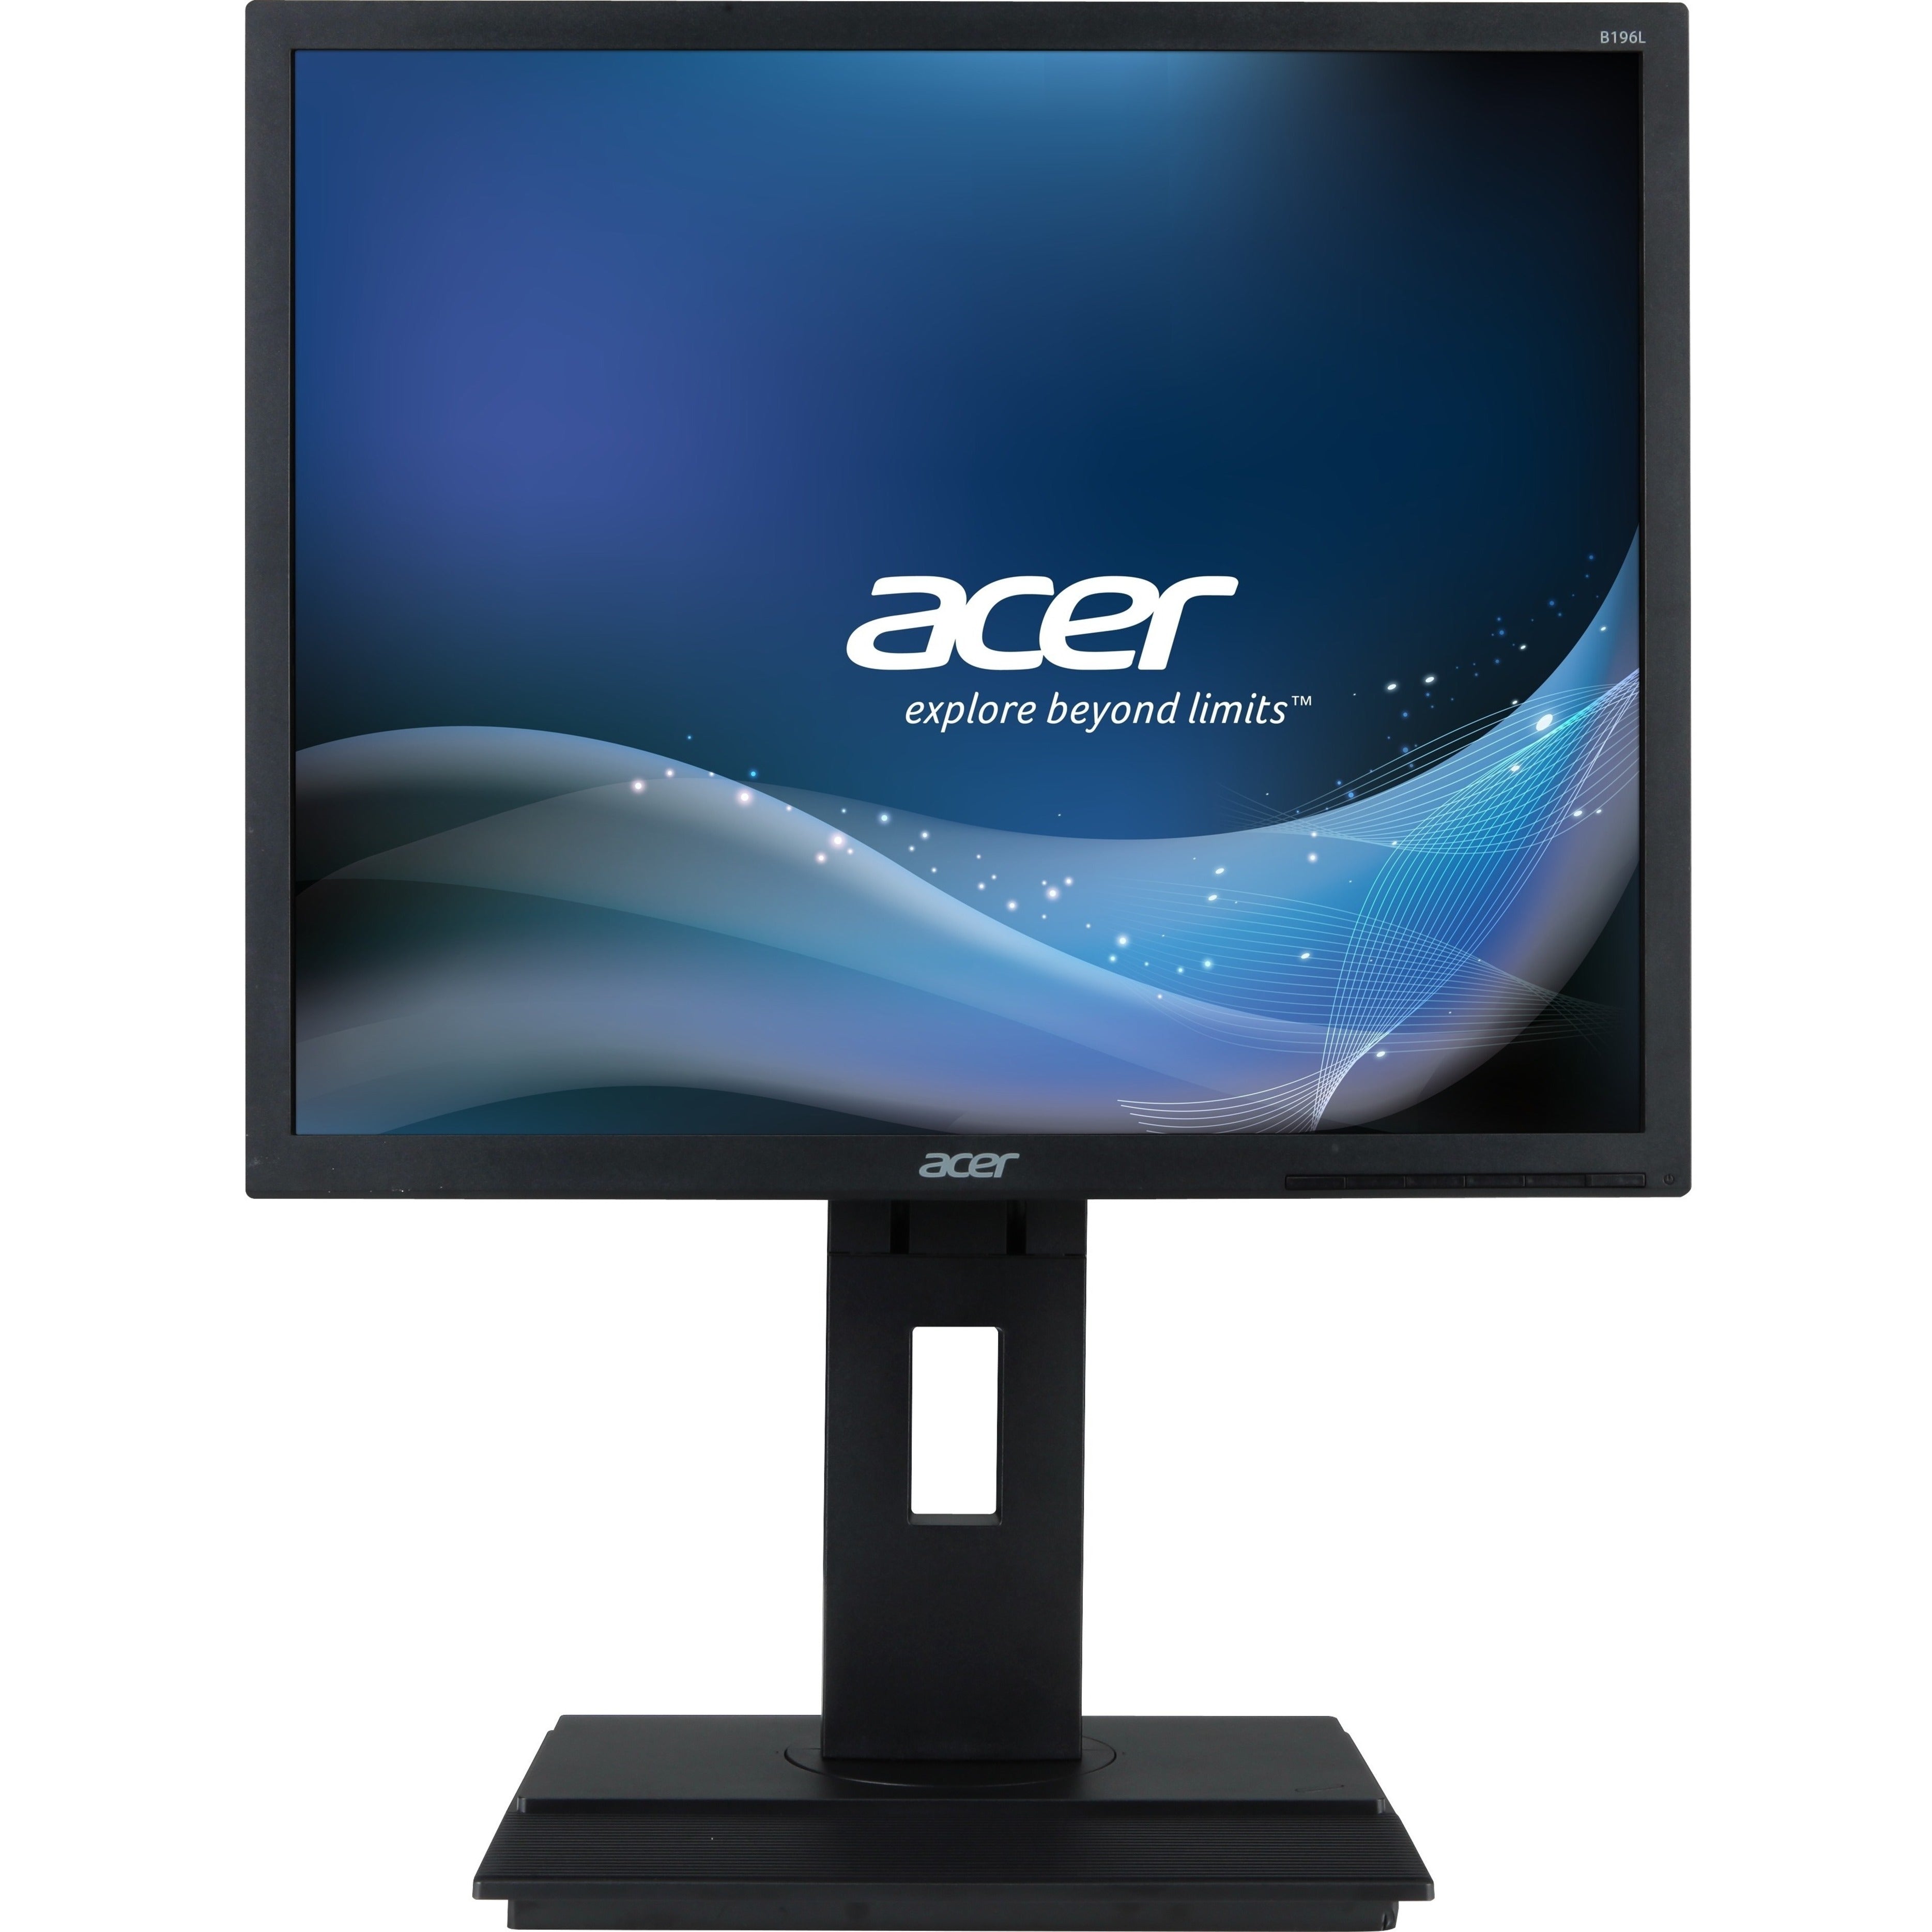 Acer B196L Aymdprz 19R 5:4 5ms 250nits LED 1xVGA 1xDVI 1DP(w/p at sku name) SPK USB 3.0 Hub Height adj. Rotation US PA PA TCO7.0 Darkgrey V.cable x1 D.cable x1 DP.cable x1 U.cable 3.0 x1 [Discontinued]